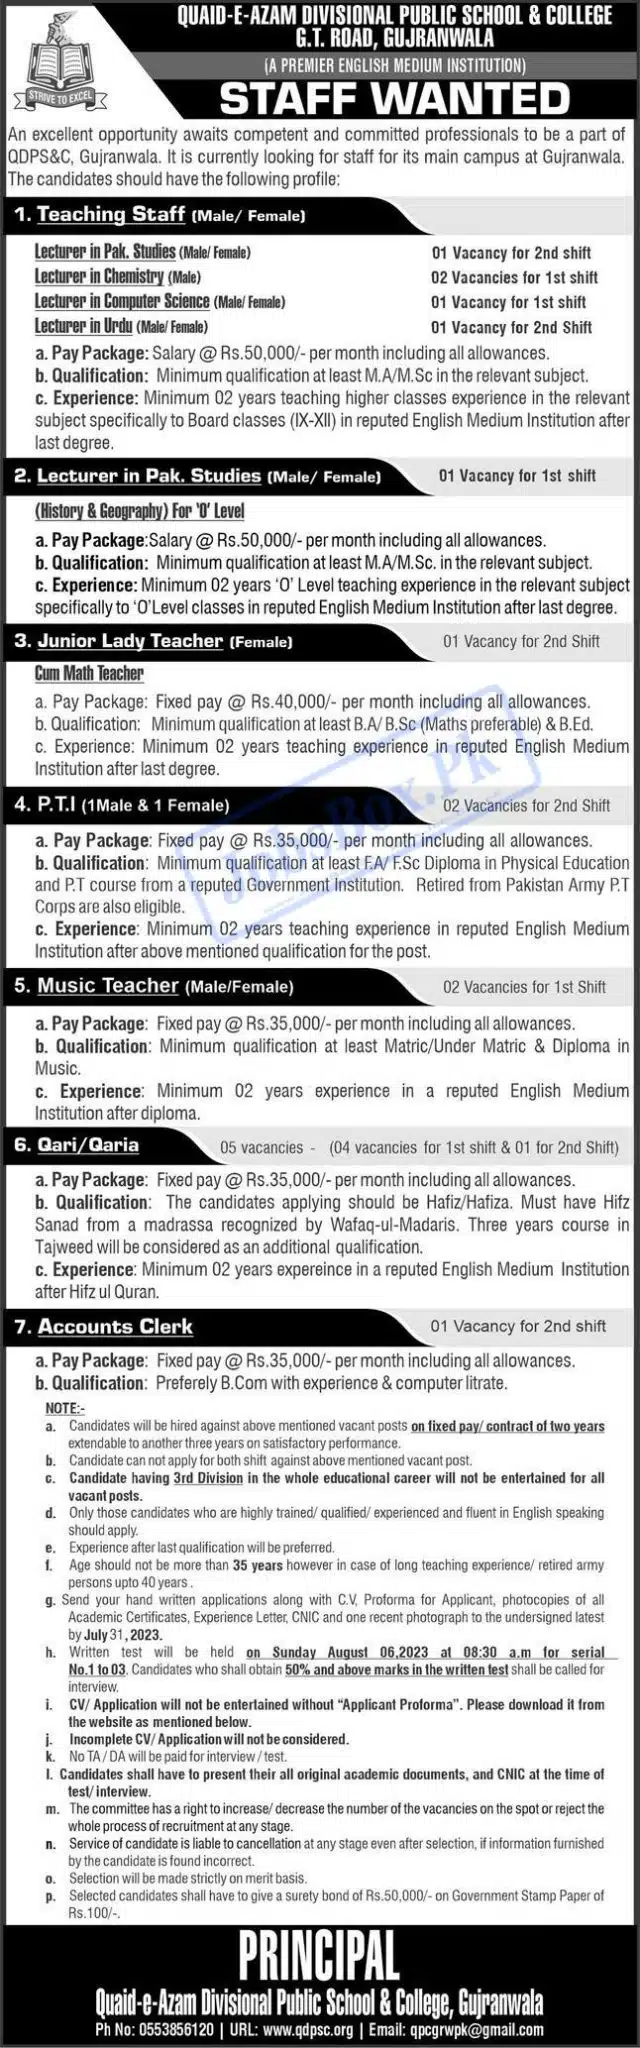 Quaid E Azam Divisional Public School and College Gujranwala Jobs